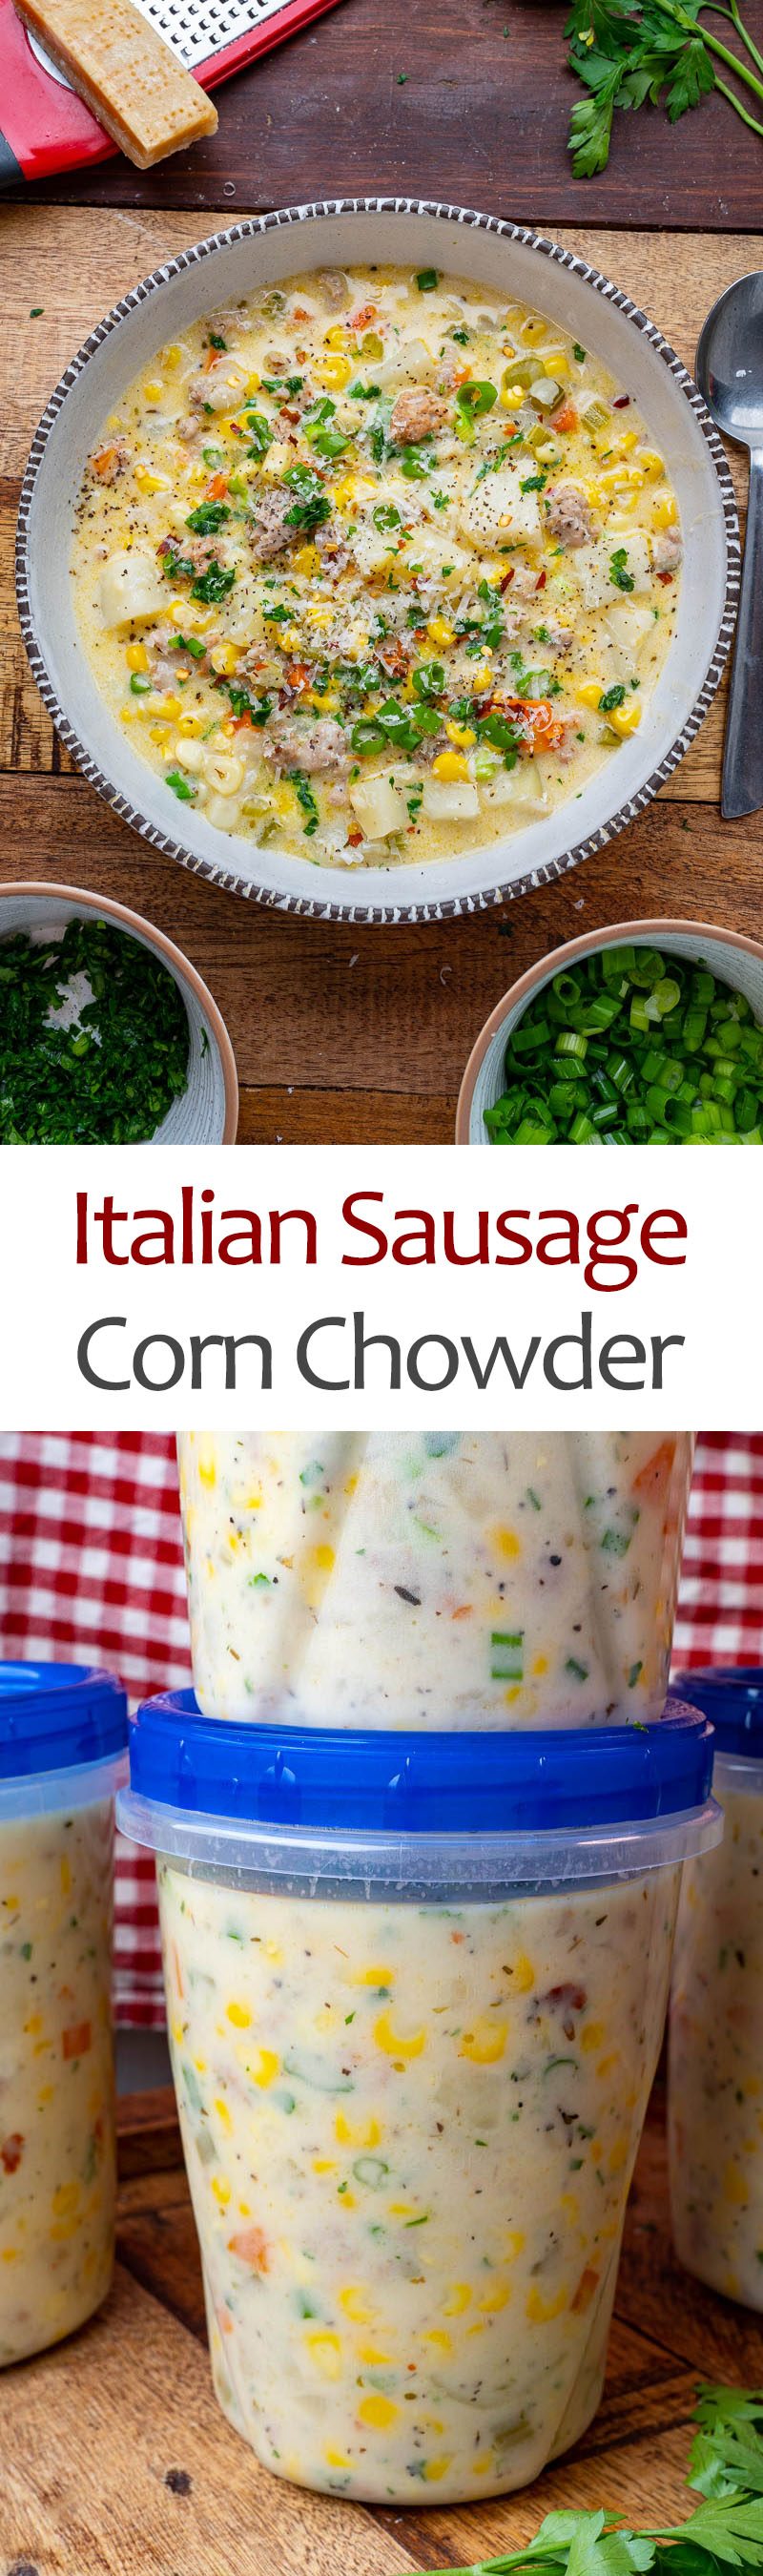 Italian Sausage Corn Chowder